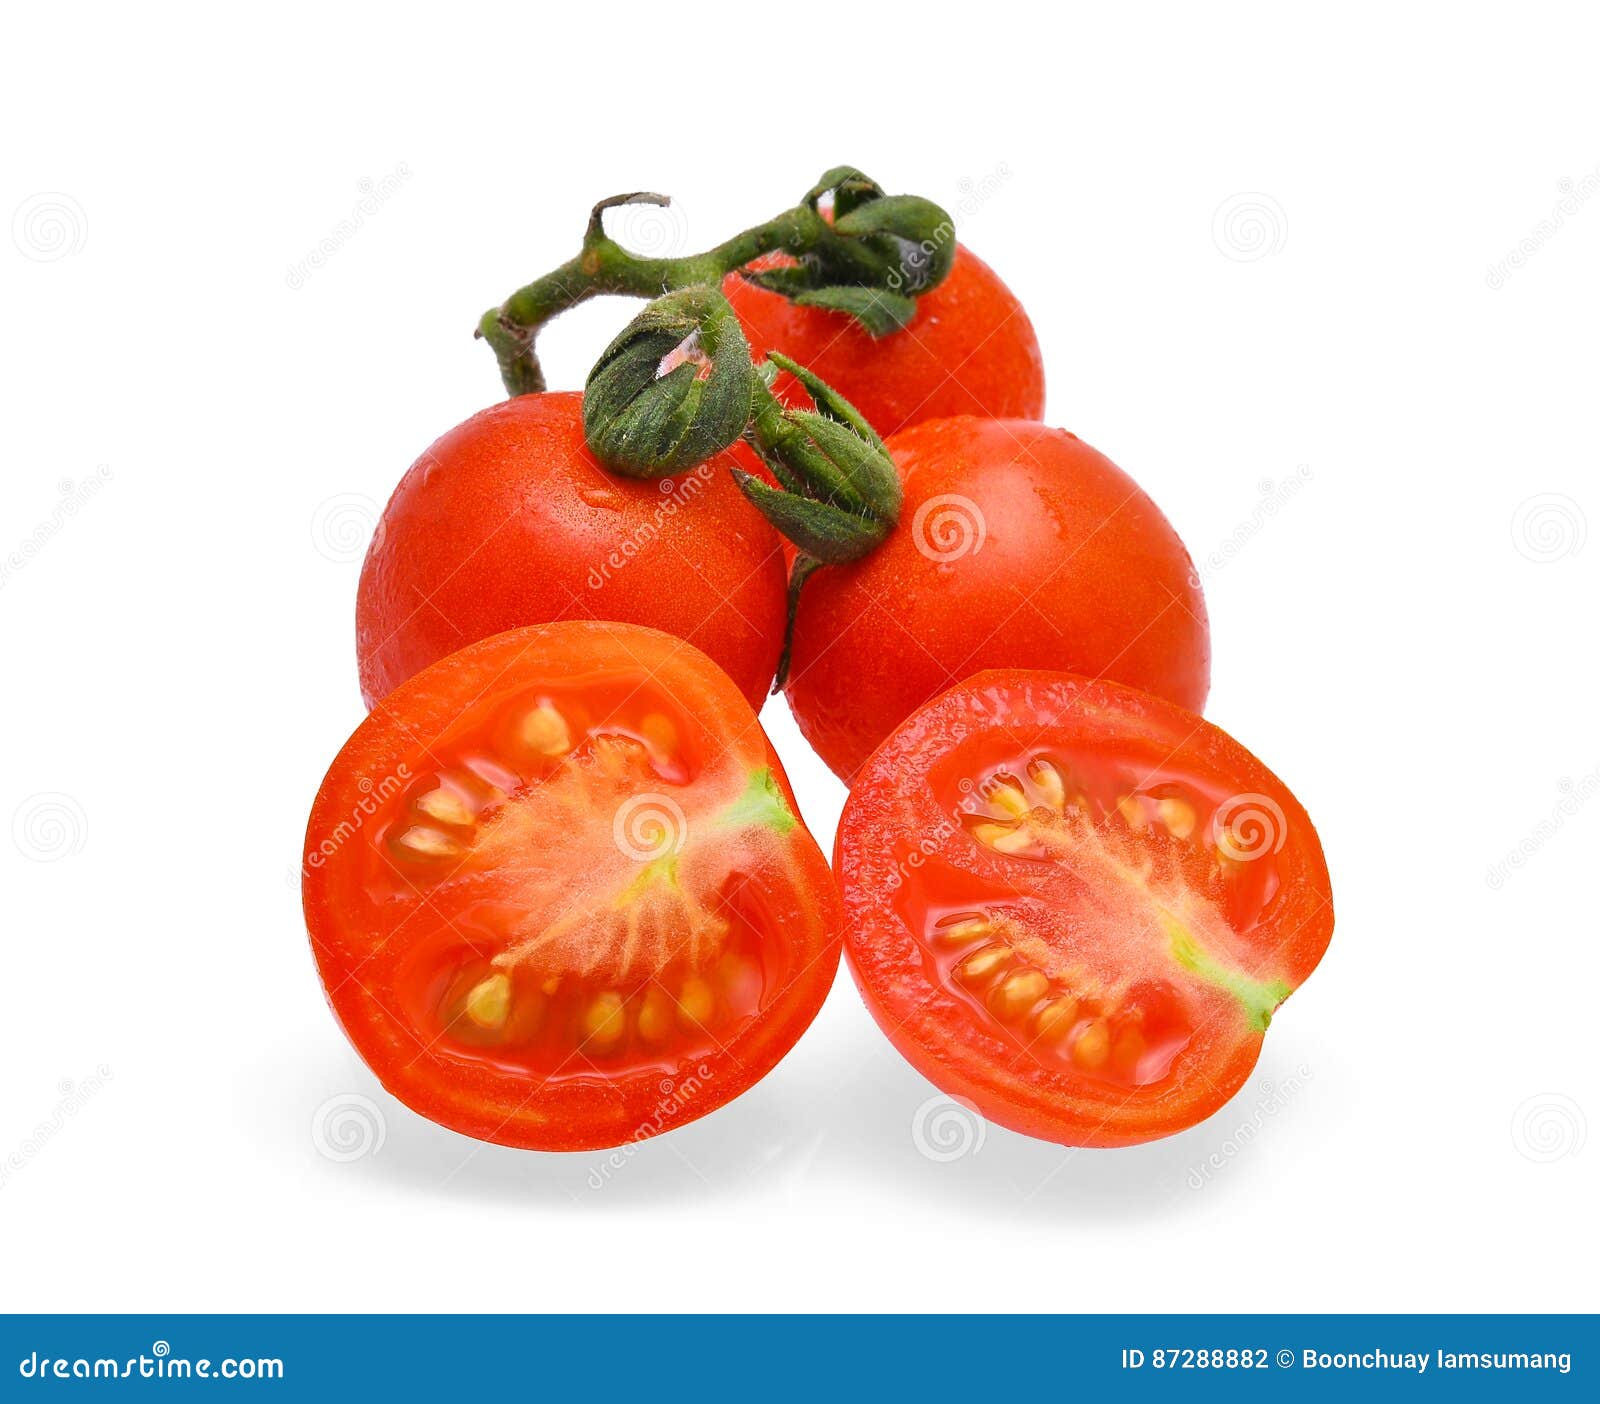 fresh tomato  on whtie